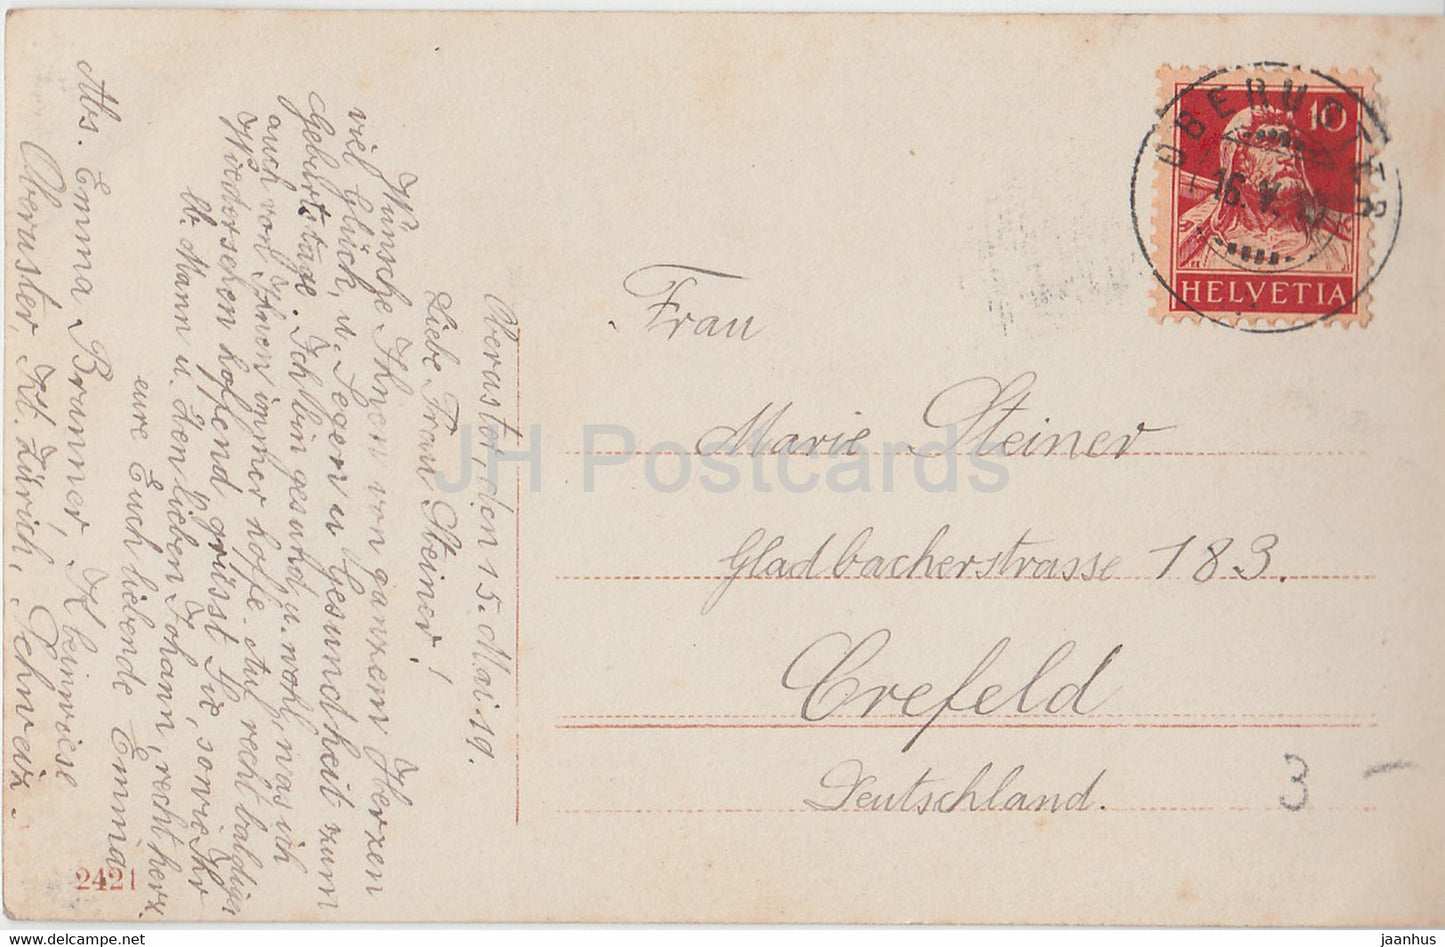 Carte de vœux d'anniversaire - Herzlichen Gluckwunsch zum Geburtstage - garçon marin - EAS - carte postale ancienne - Allemagne - utilisée